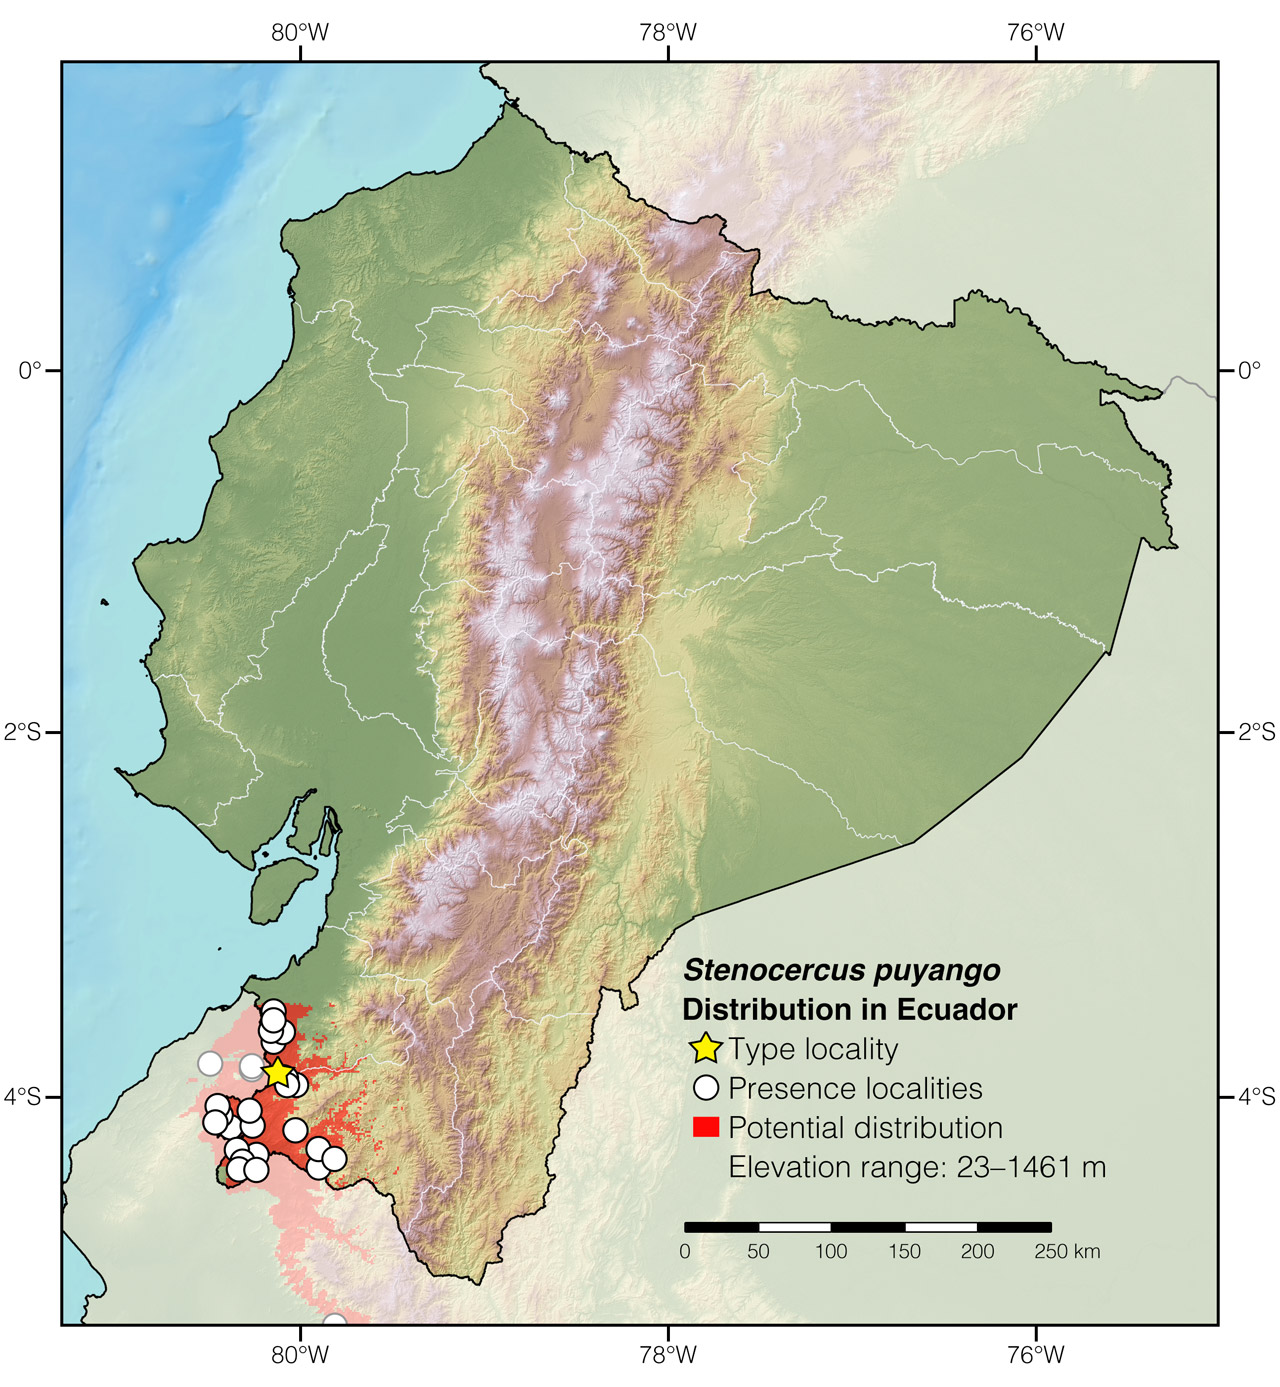 Distribution of Stenocercus puyango in Ecuador